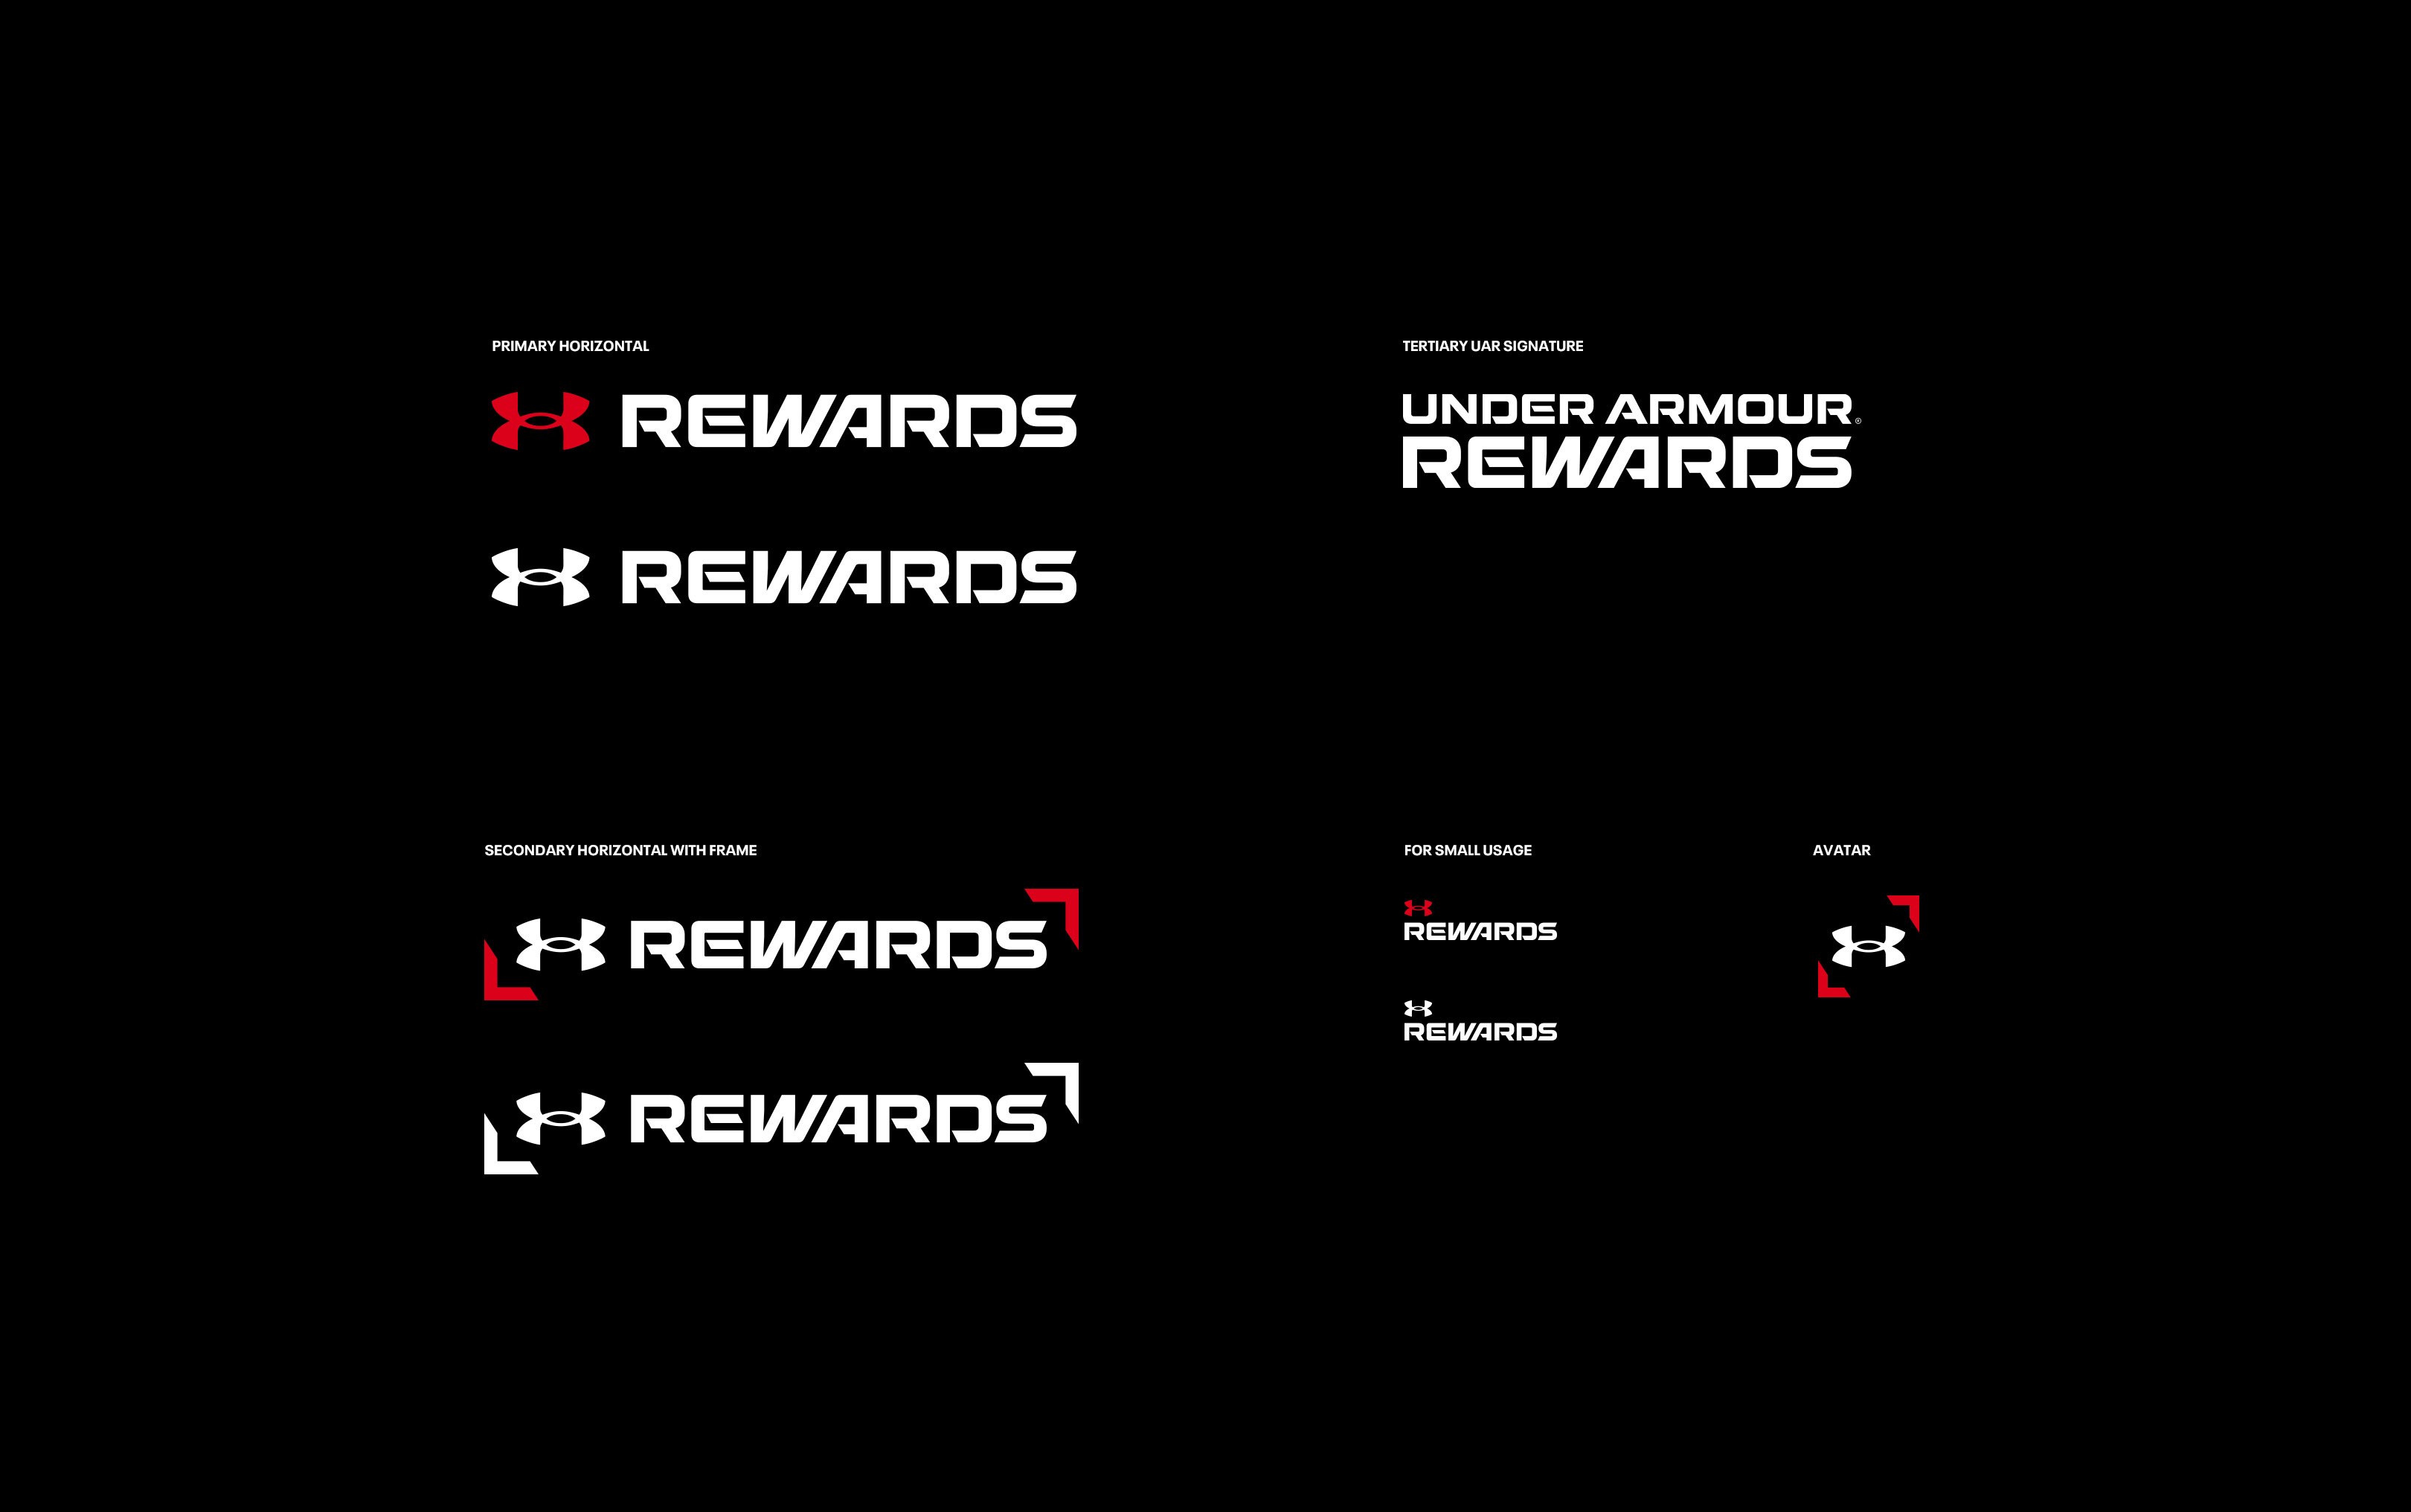 unerarmour-rewards-branding-stylhaus-14